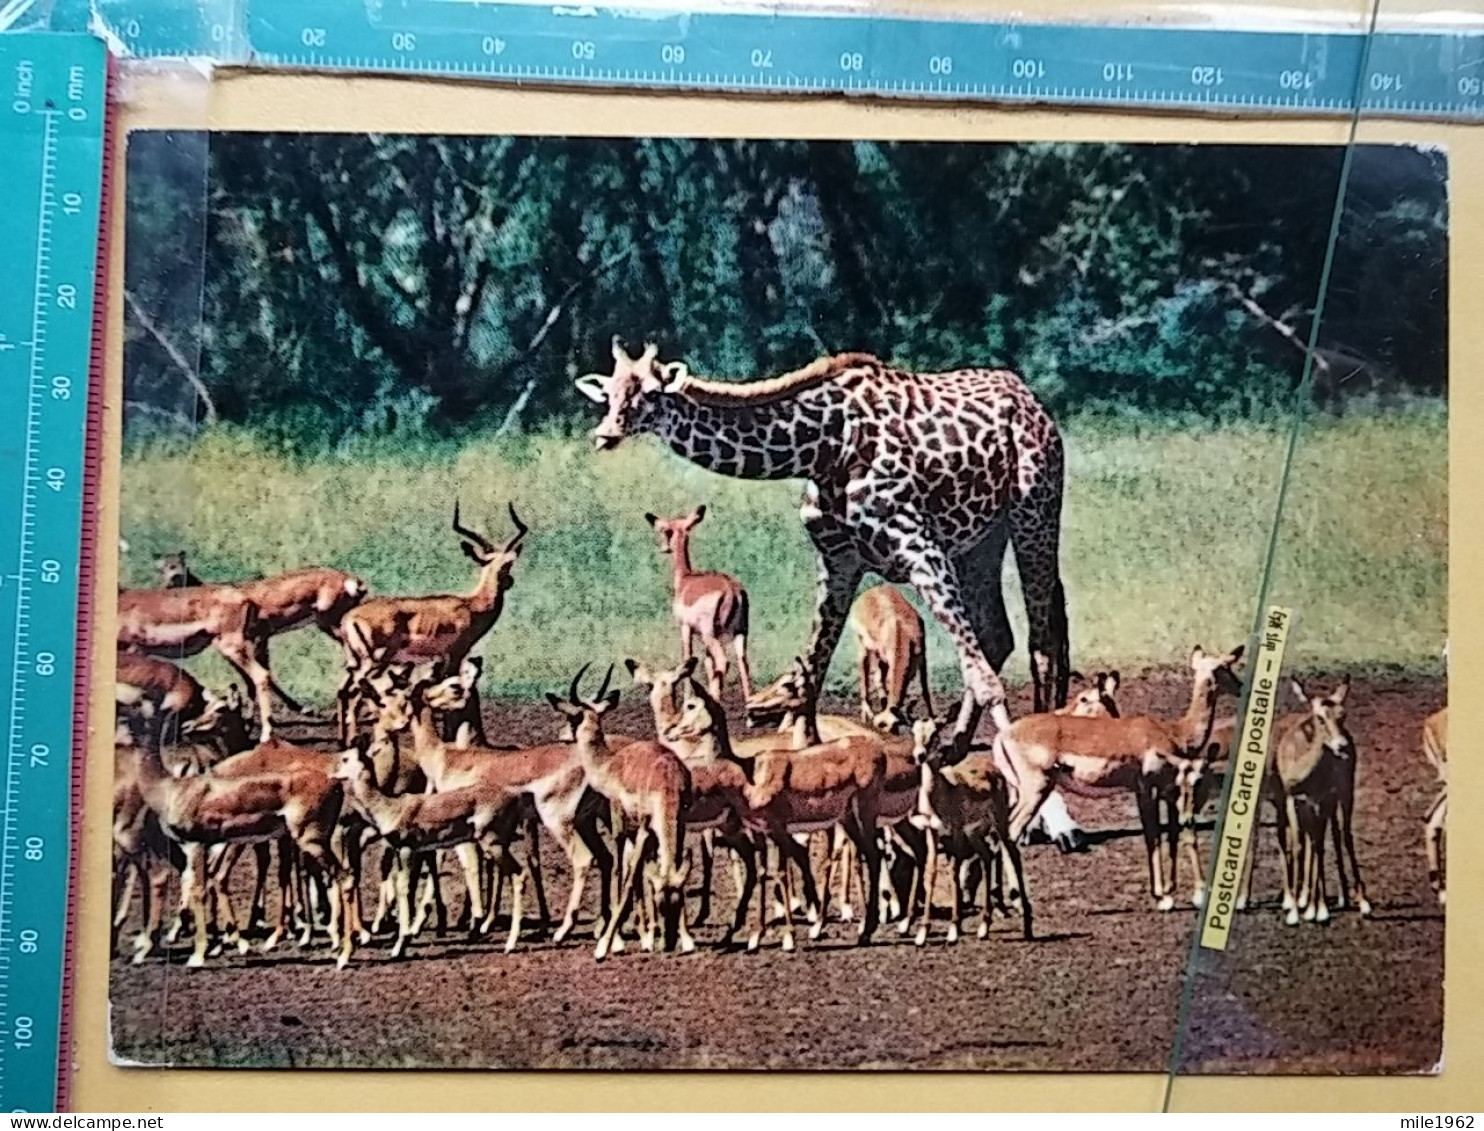 KOV 506-49 - GIRAFFE, IMPALA, AFRICA, ZAMBIA - Giraffes